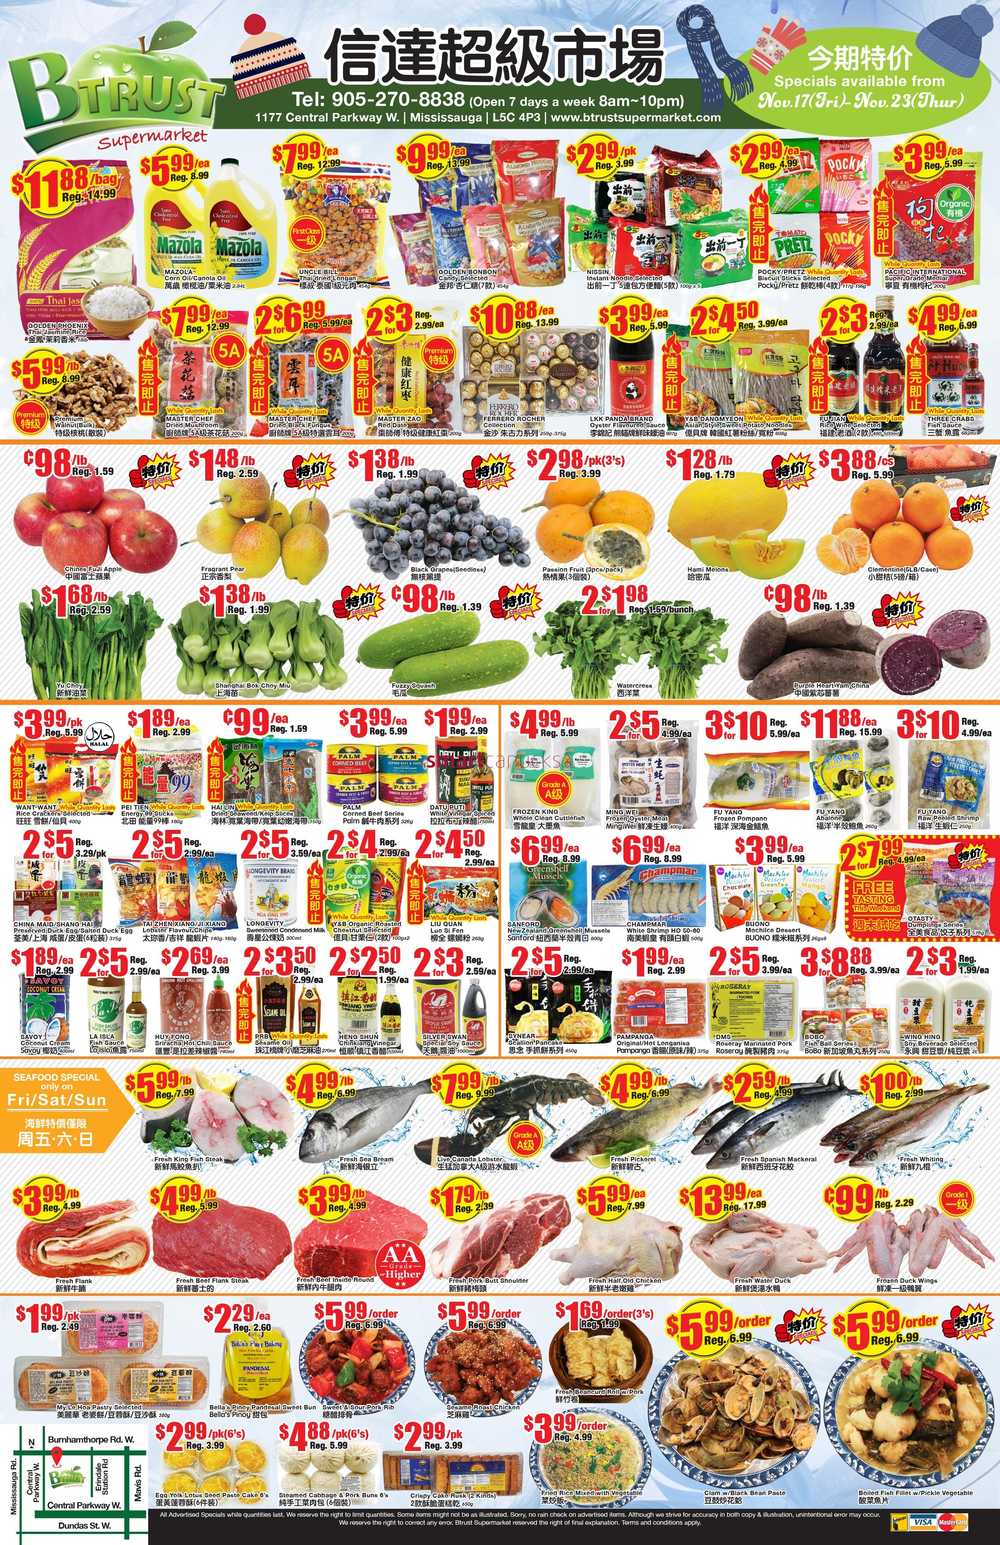 Btrust Supermarket (Mississauga) Flyer November 17 to 23